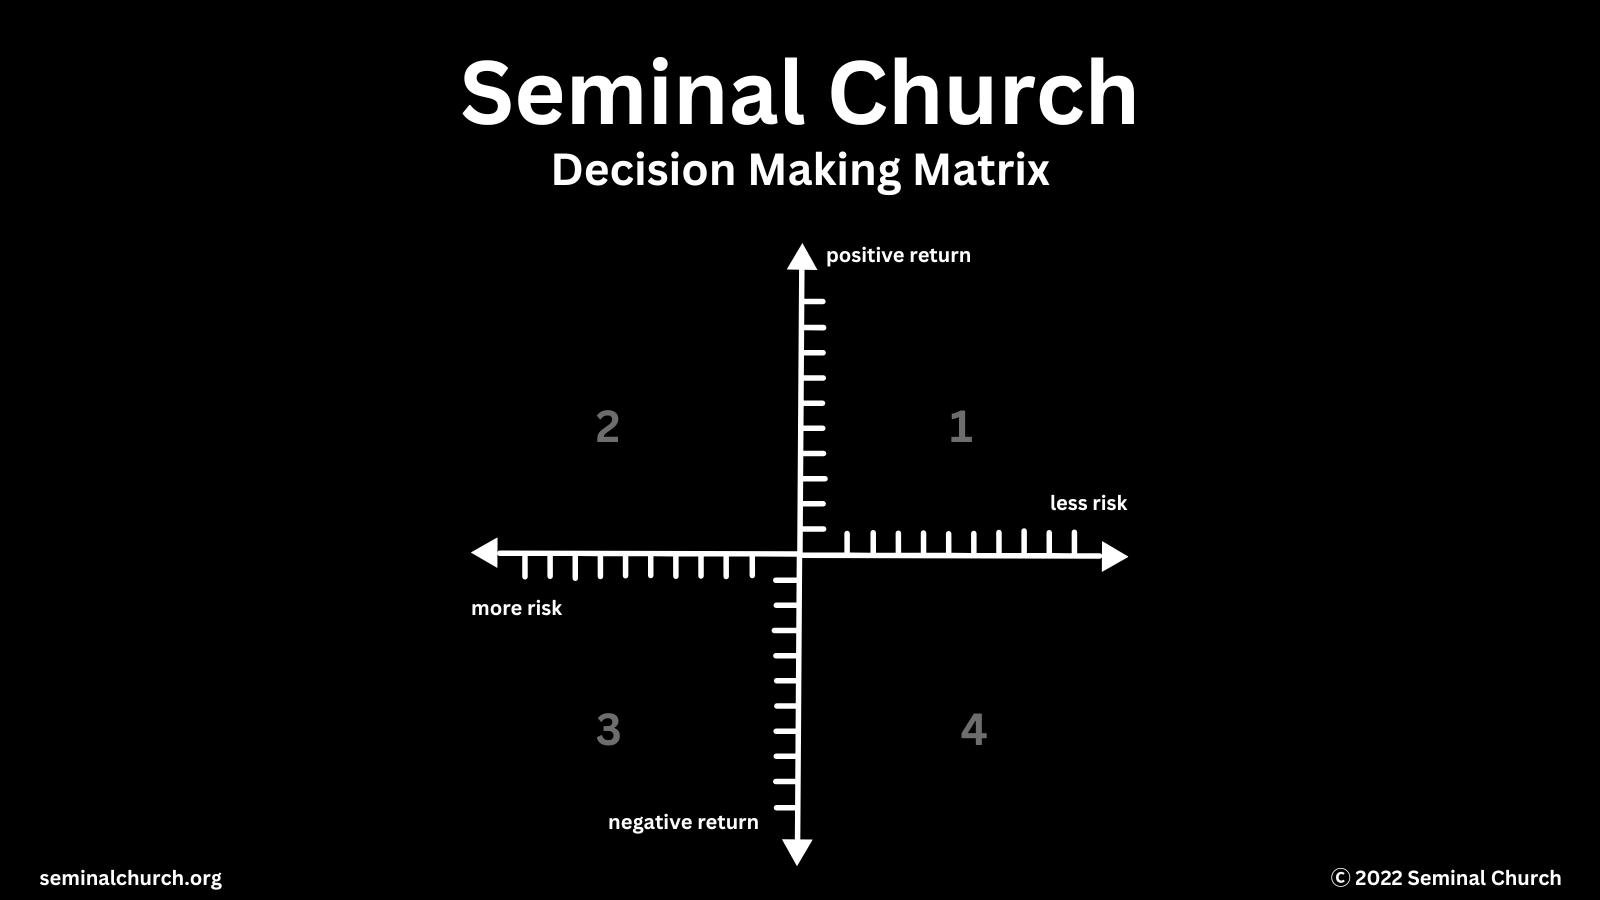 The Seminal Church Decision Making Matrix